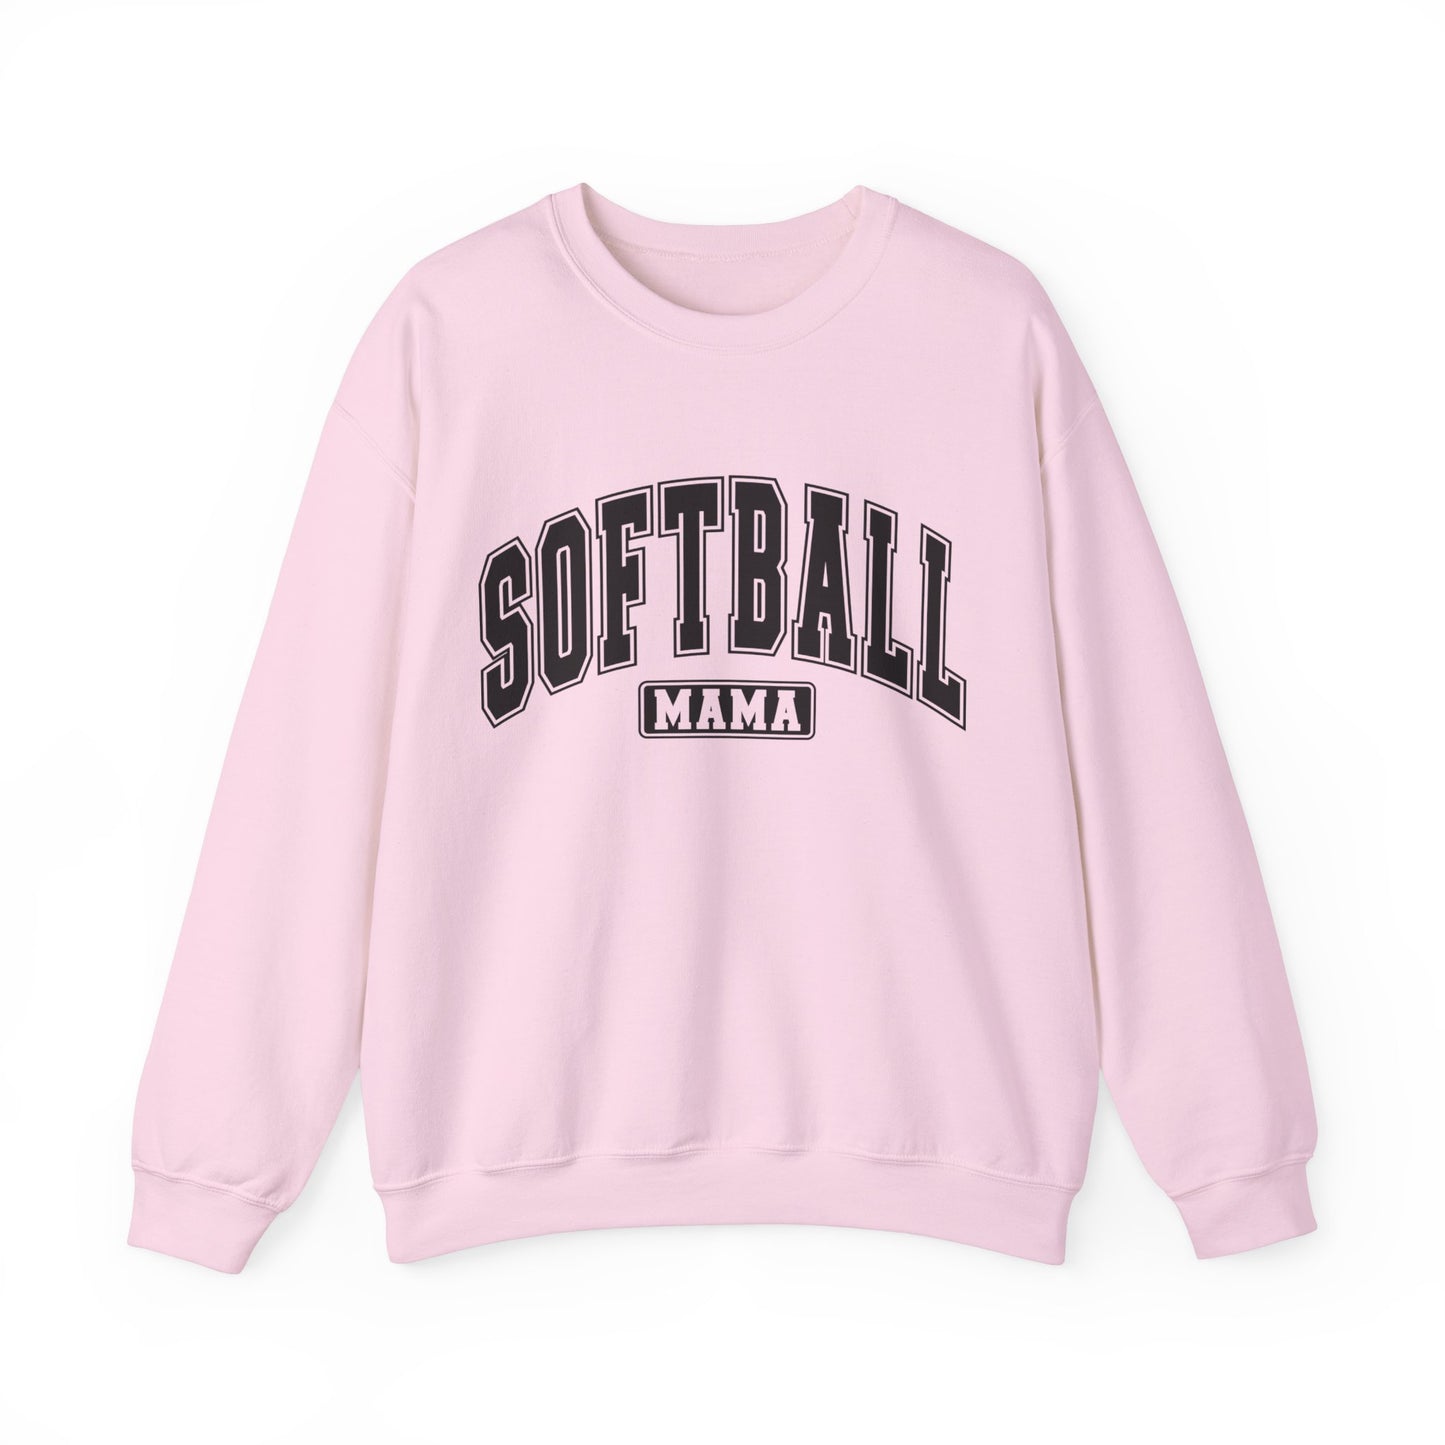 Softball Mama Women's Crewneck Sweatshirt